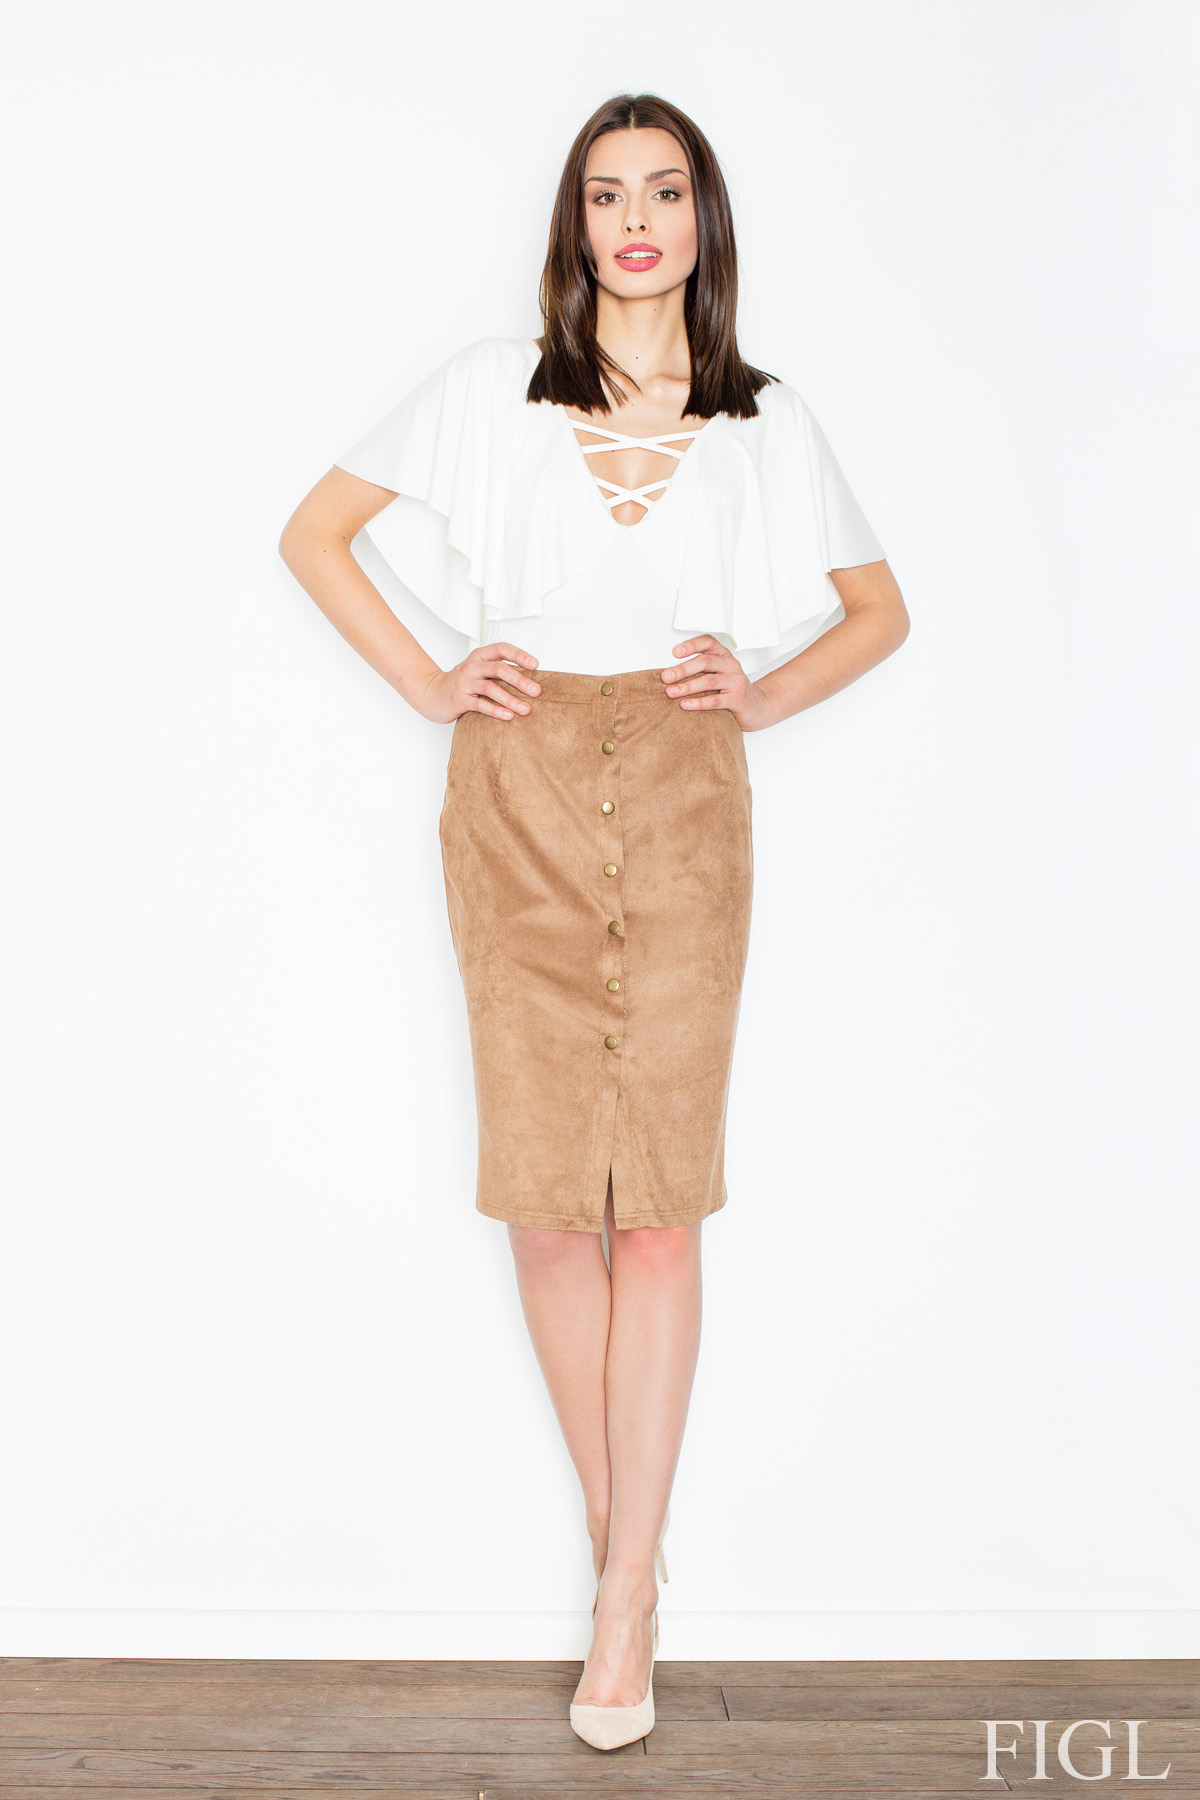  Skirt model 52616 Figl  brown